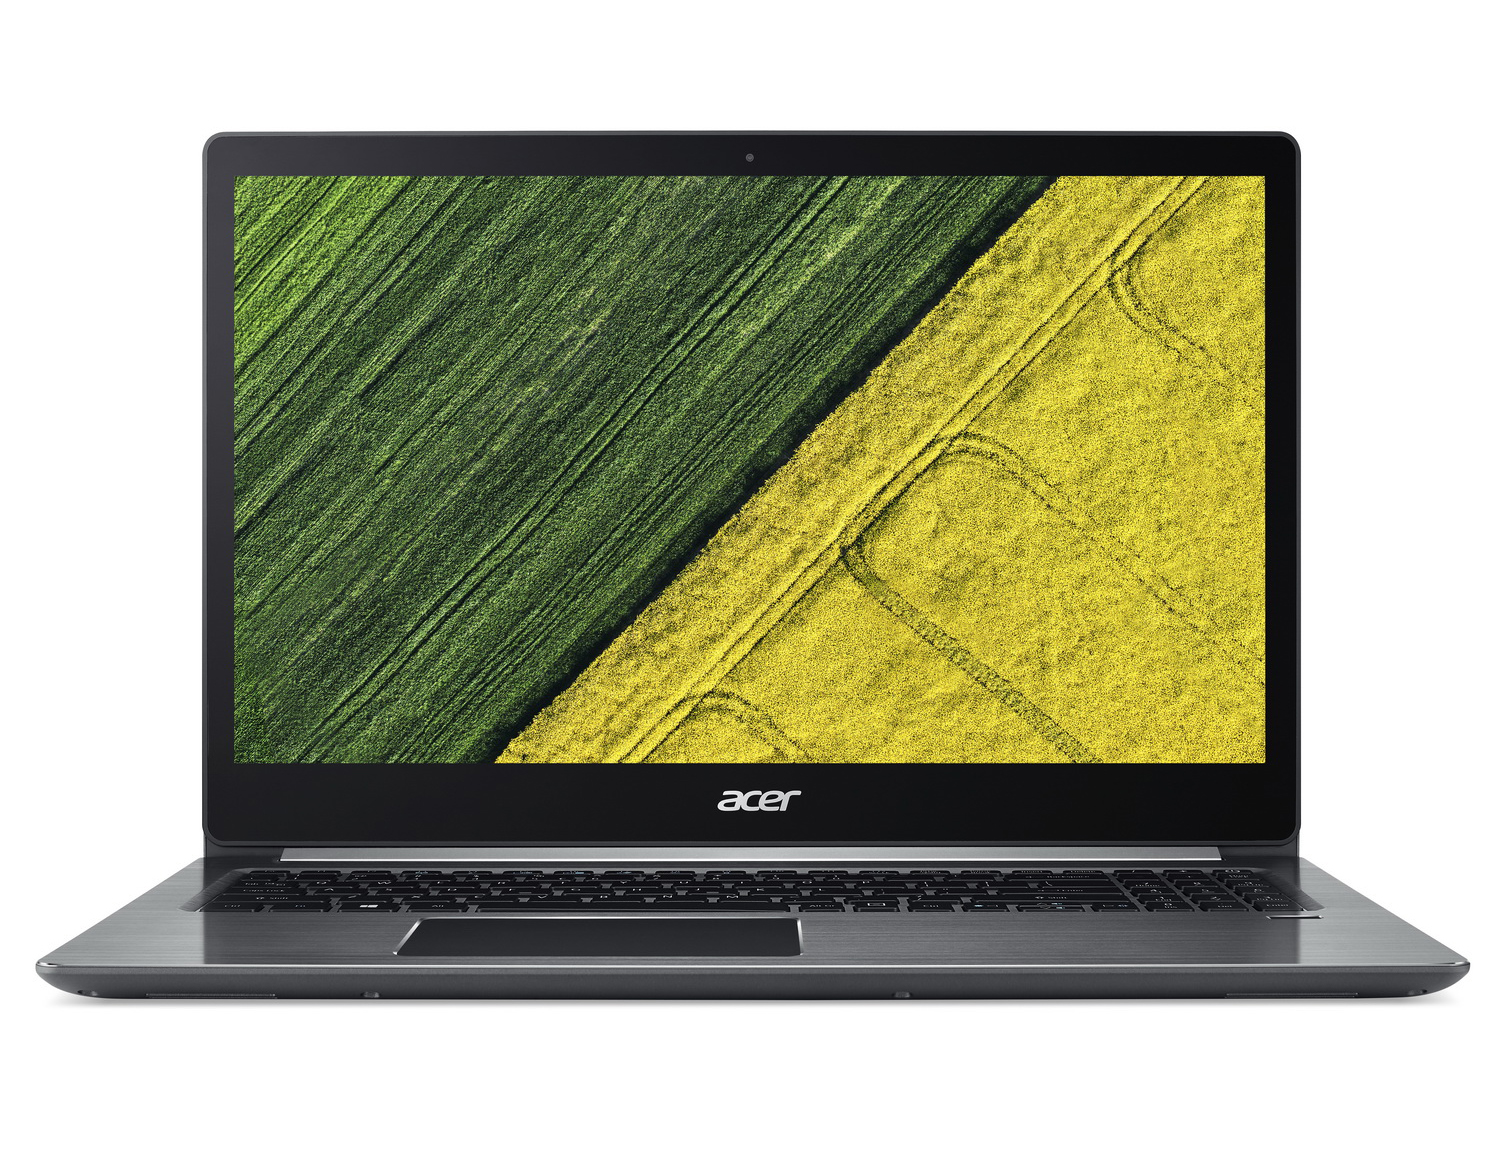 Acer Swift 3 SF31541R4W1 External Reviews